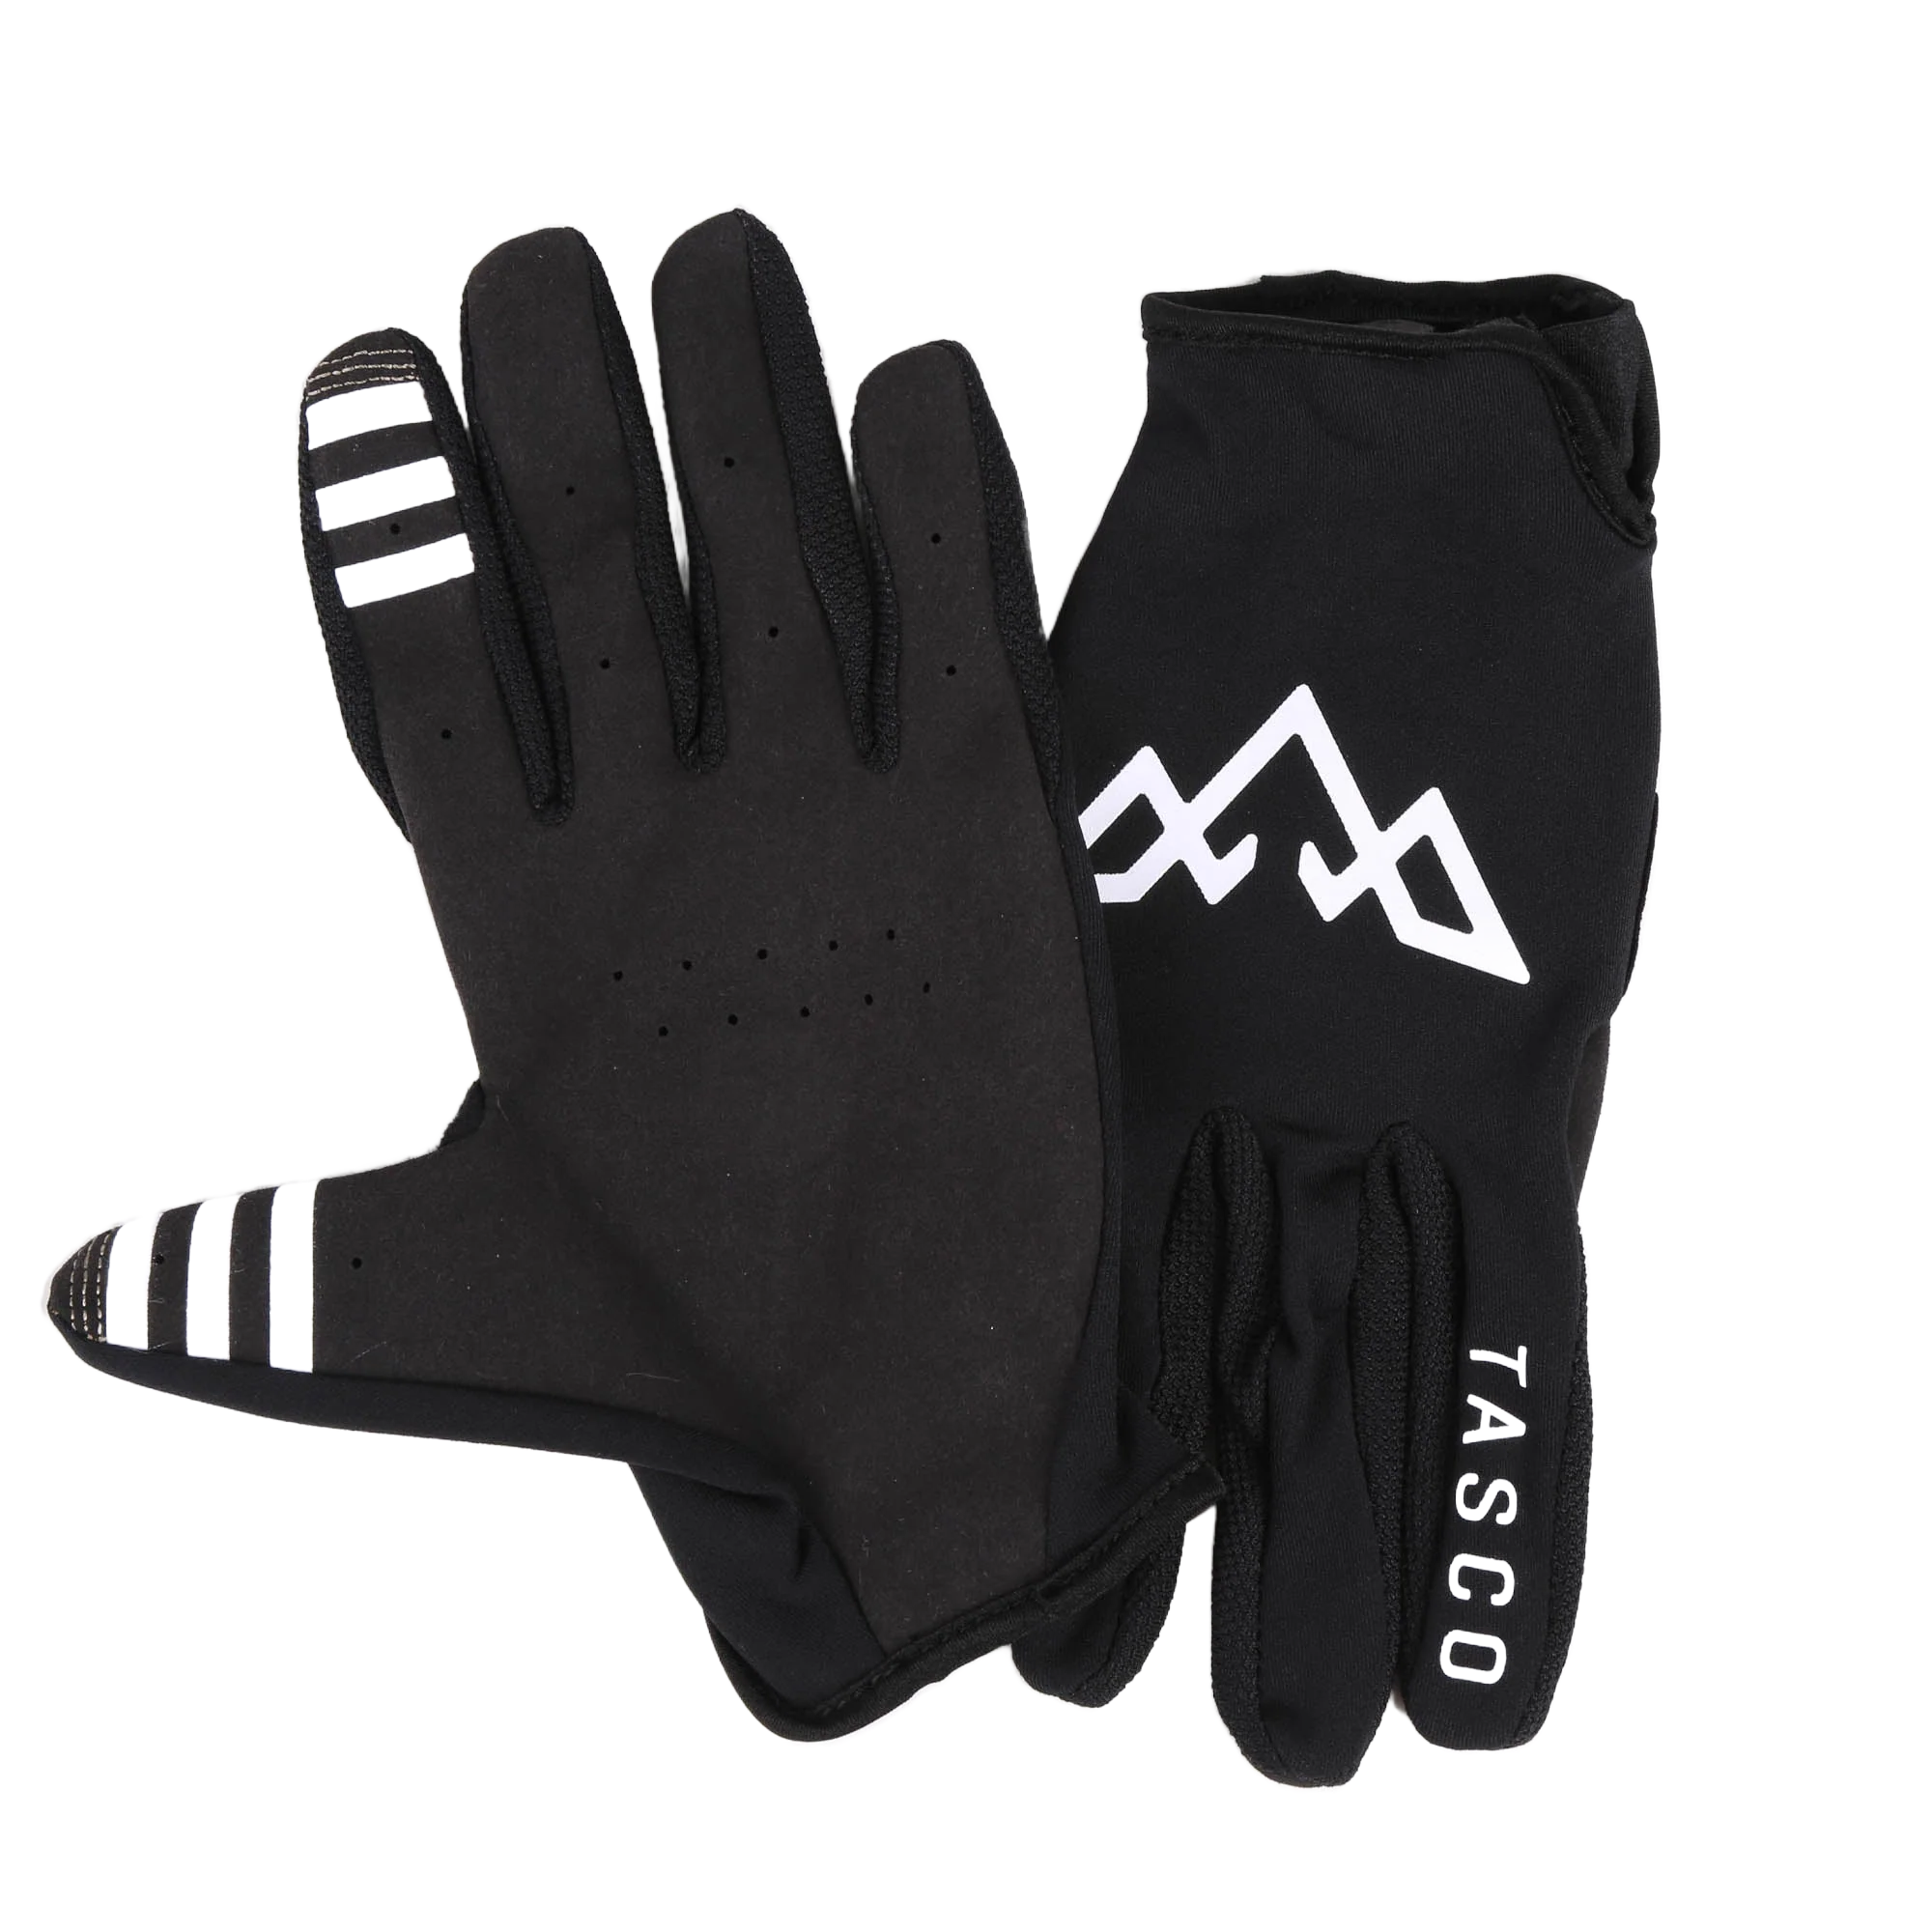 Ridgeline Gloves - Black